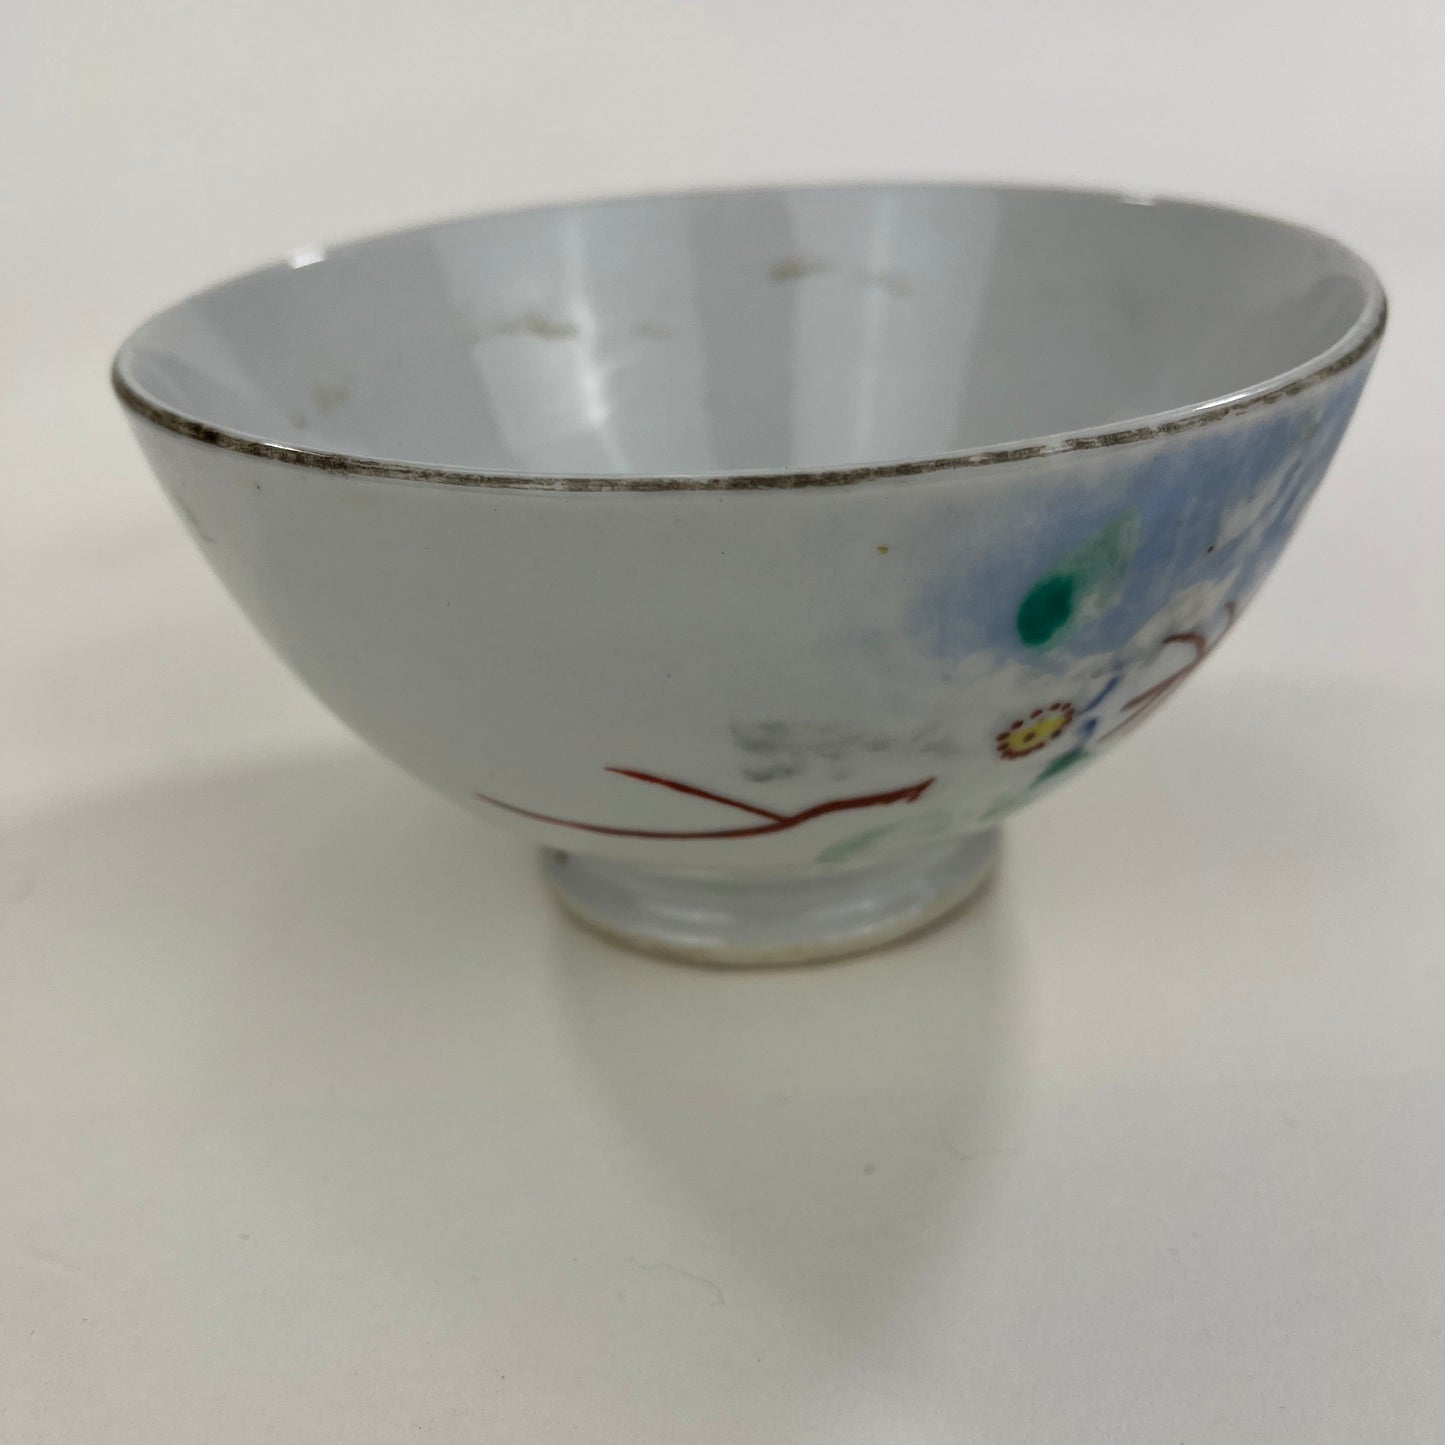 Tea Ceremony Chawan Tea Bowl Colorful Fower Paining on Porcelain Glaze 5"